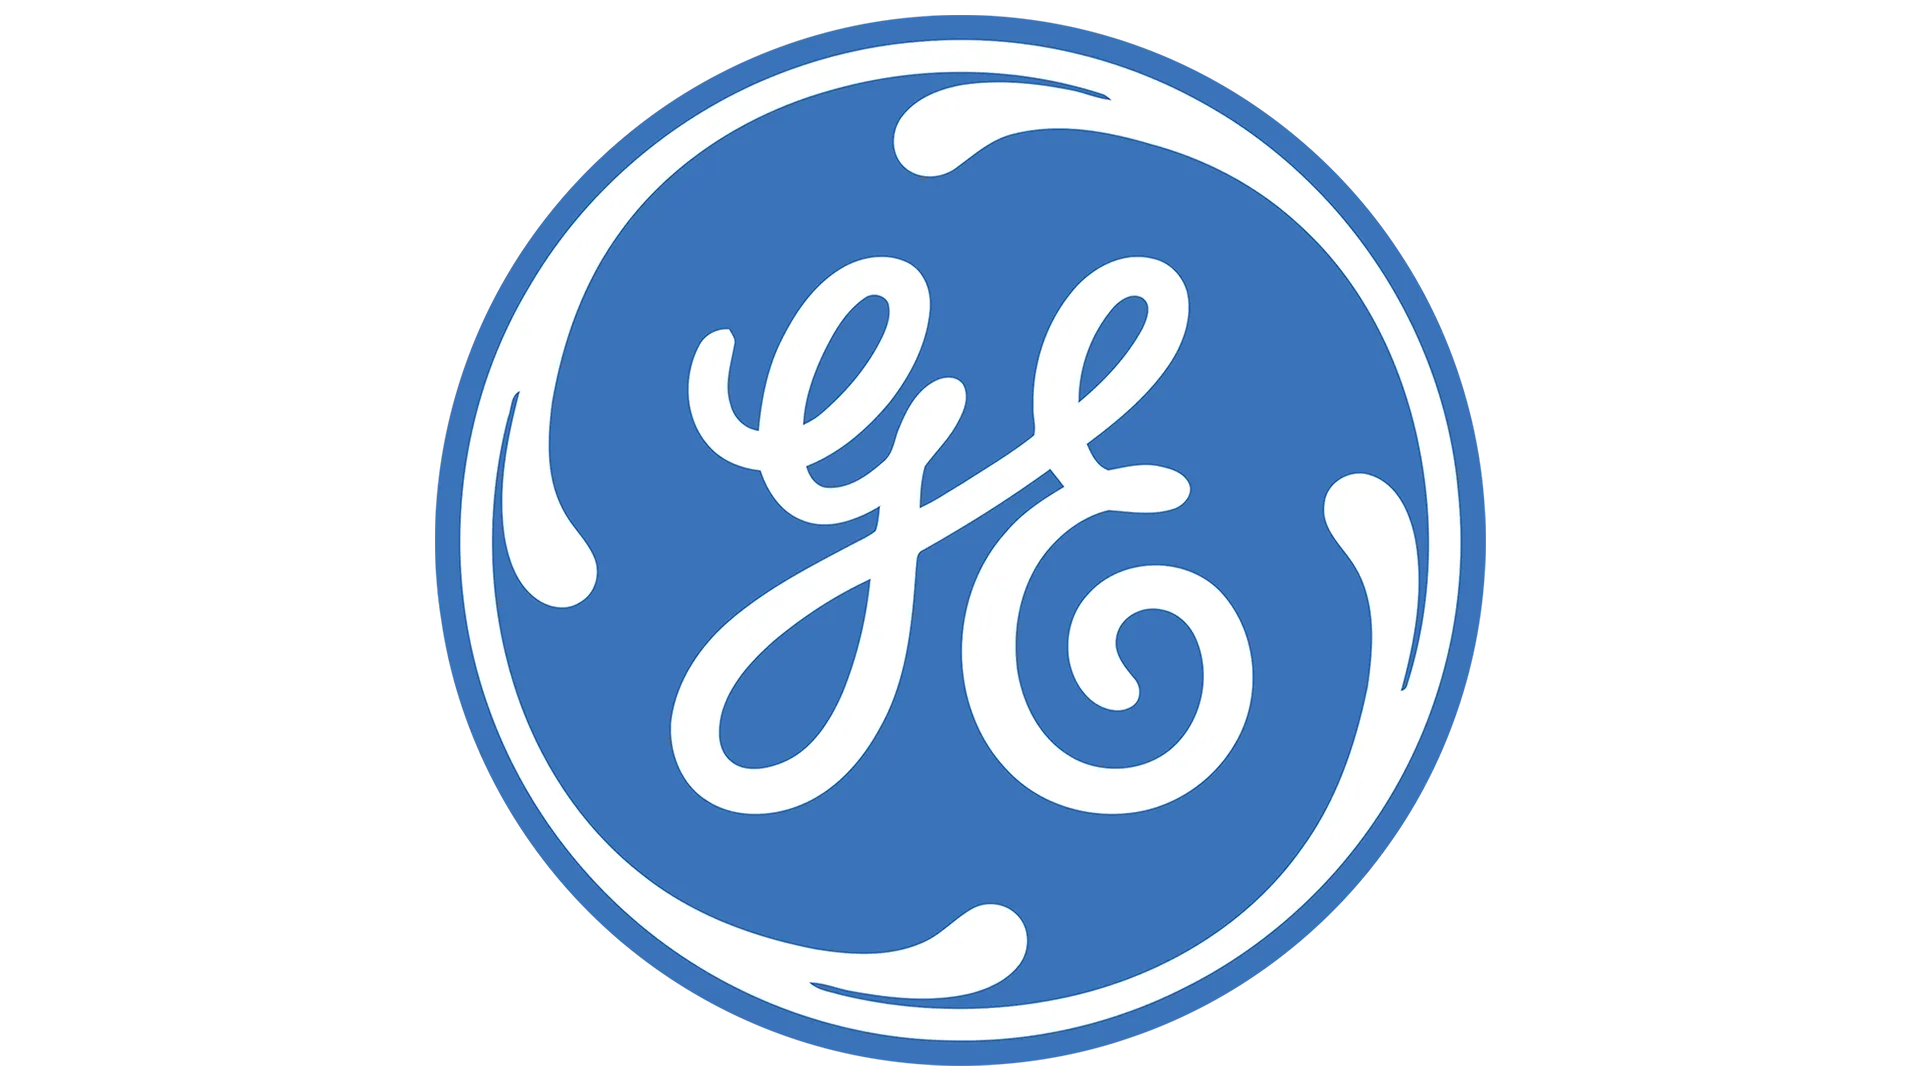 general-electric-logo-png-transparent-reduced